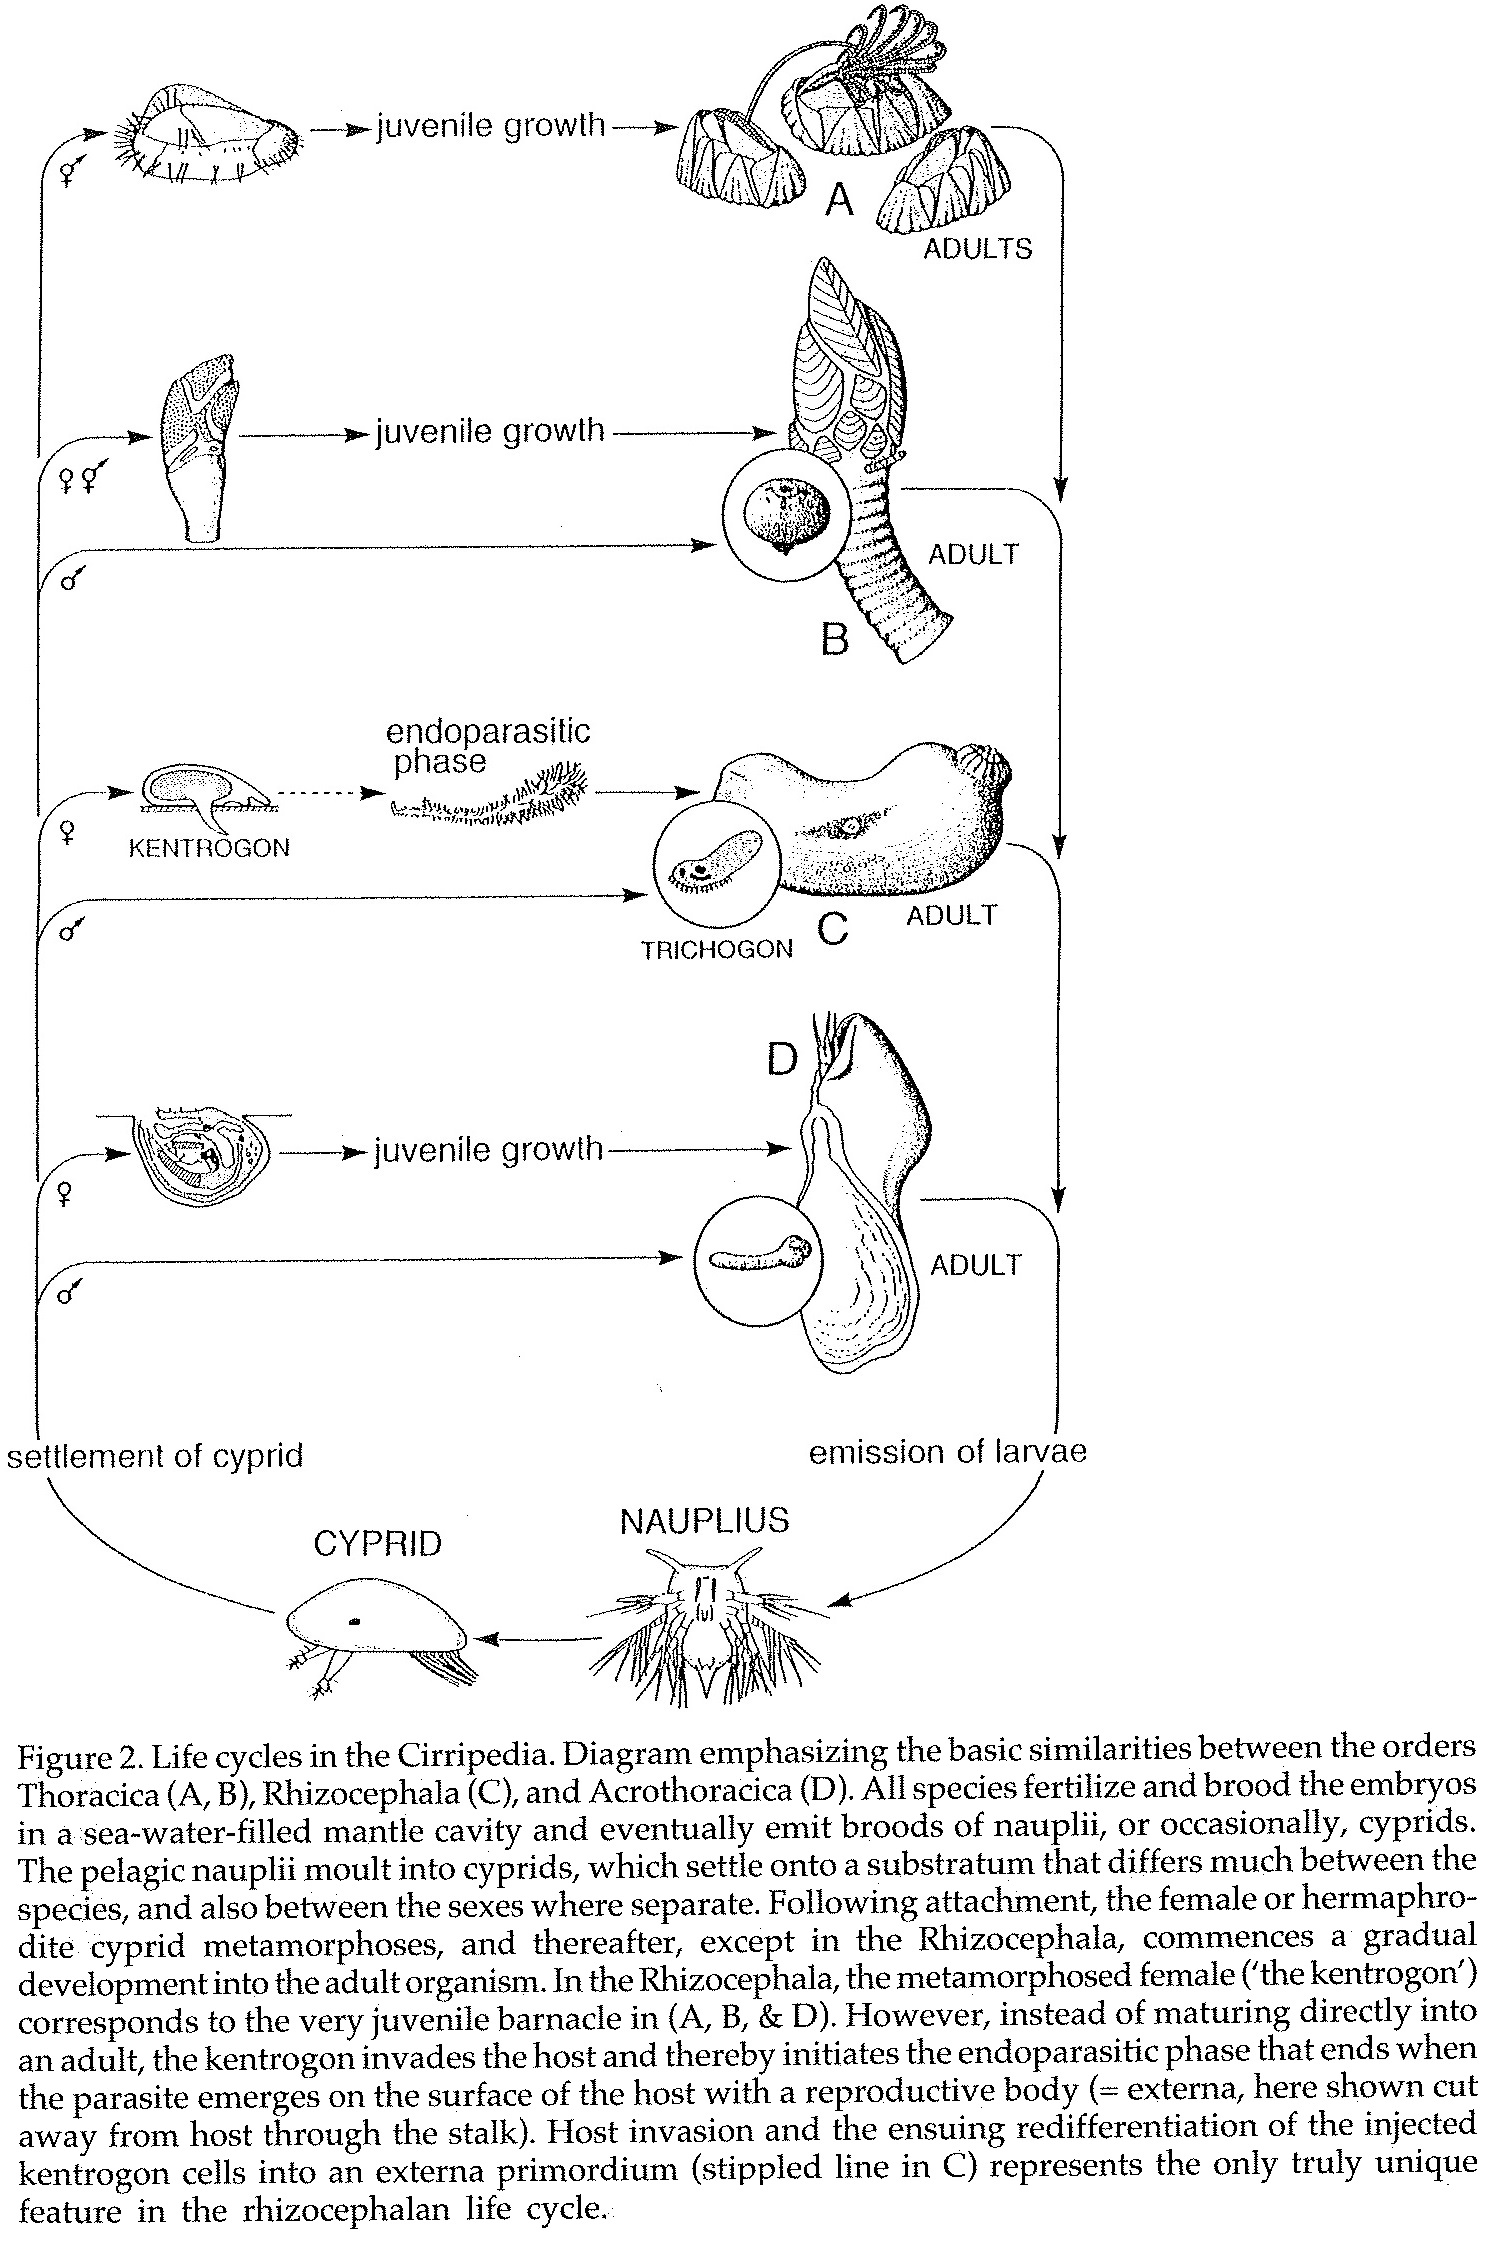 Life cycle of Cirripedes.jpg